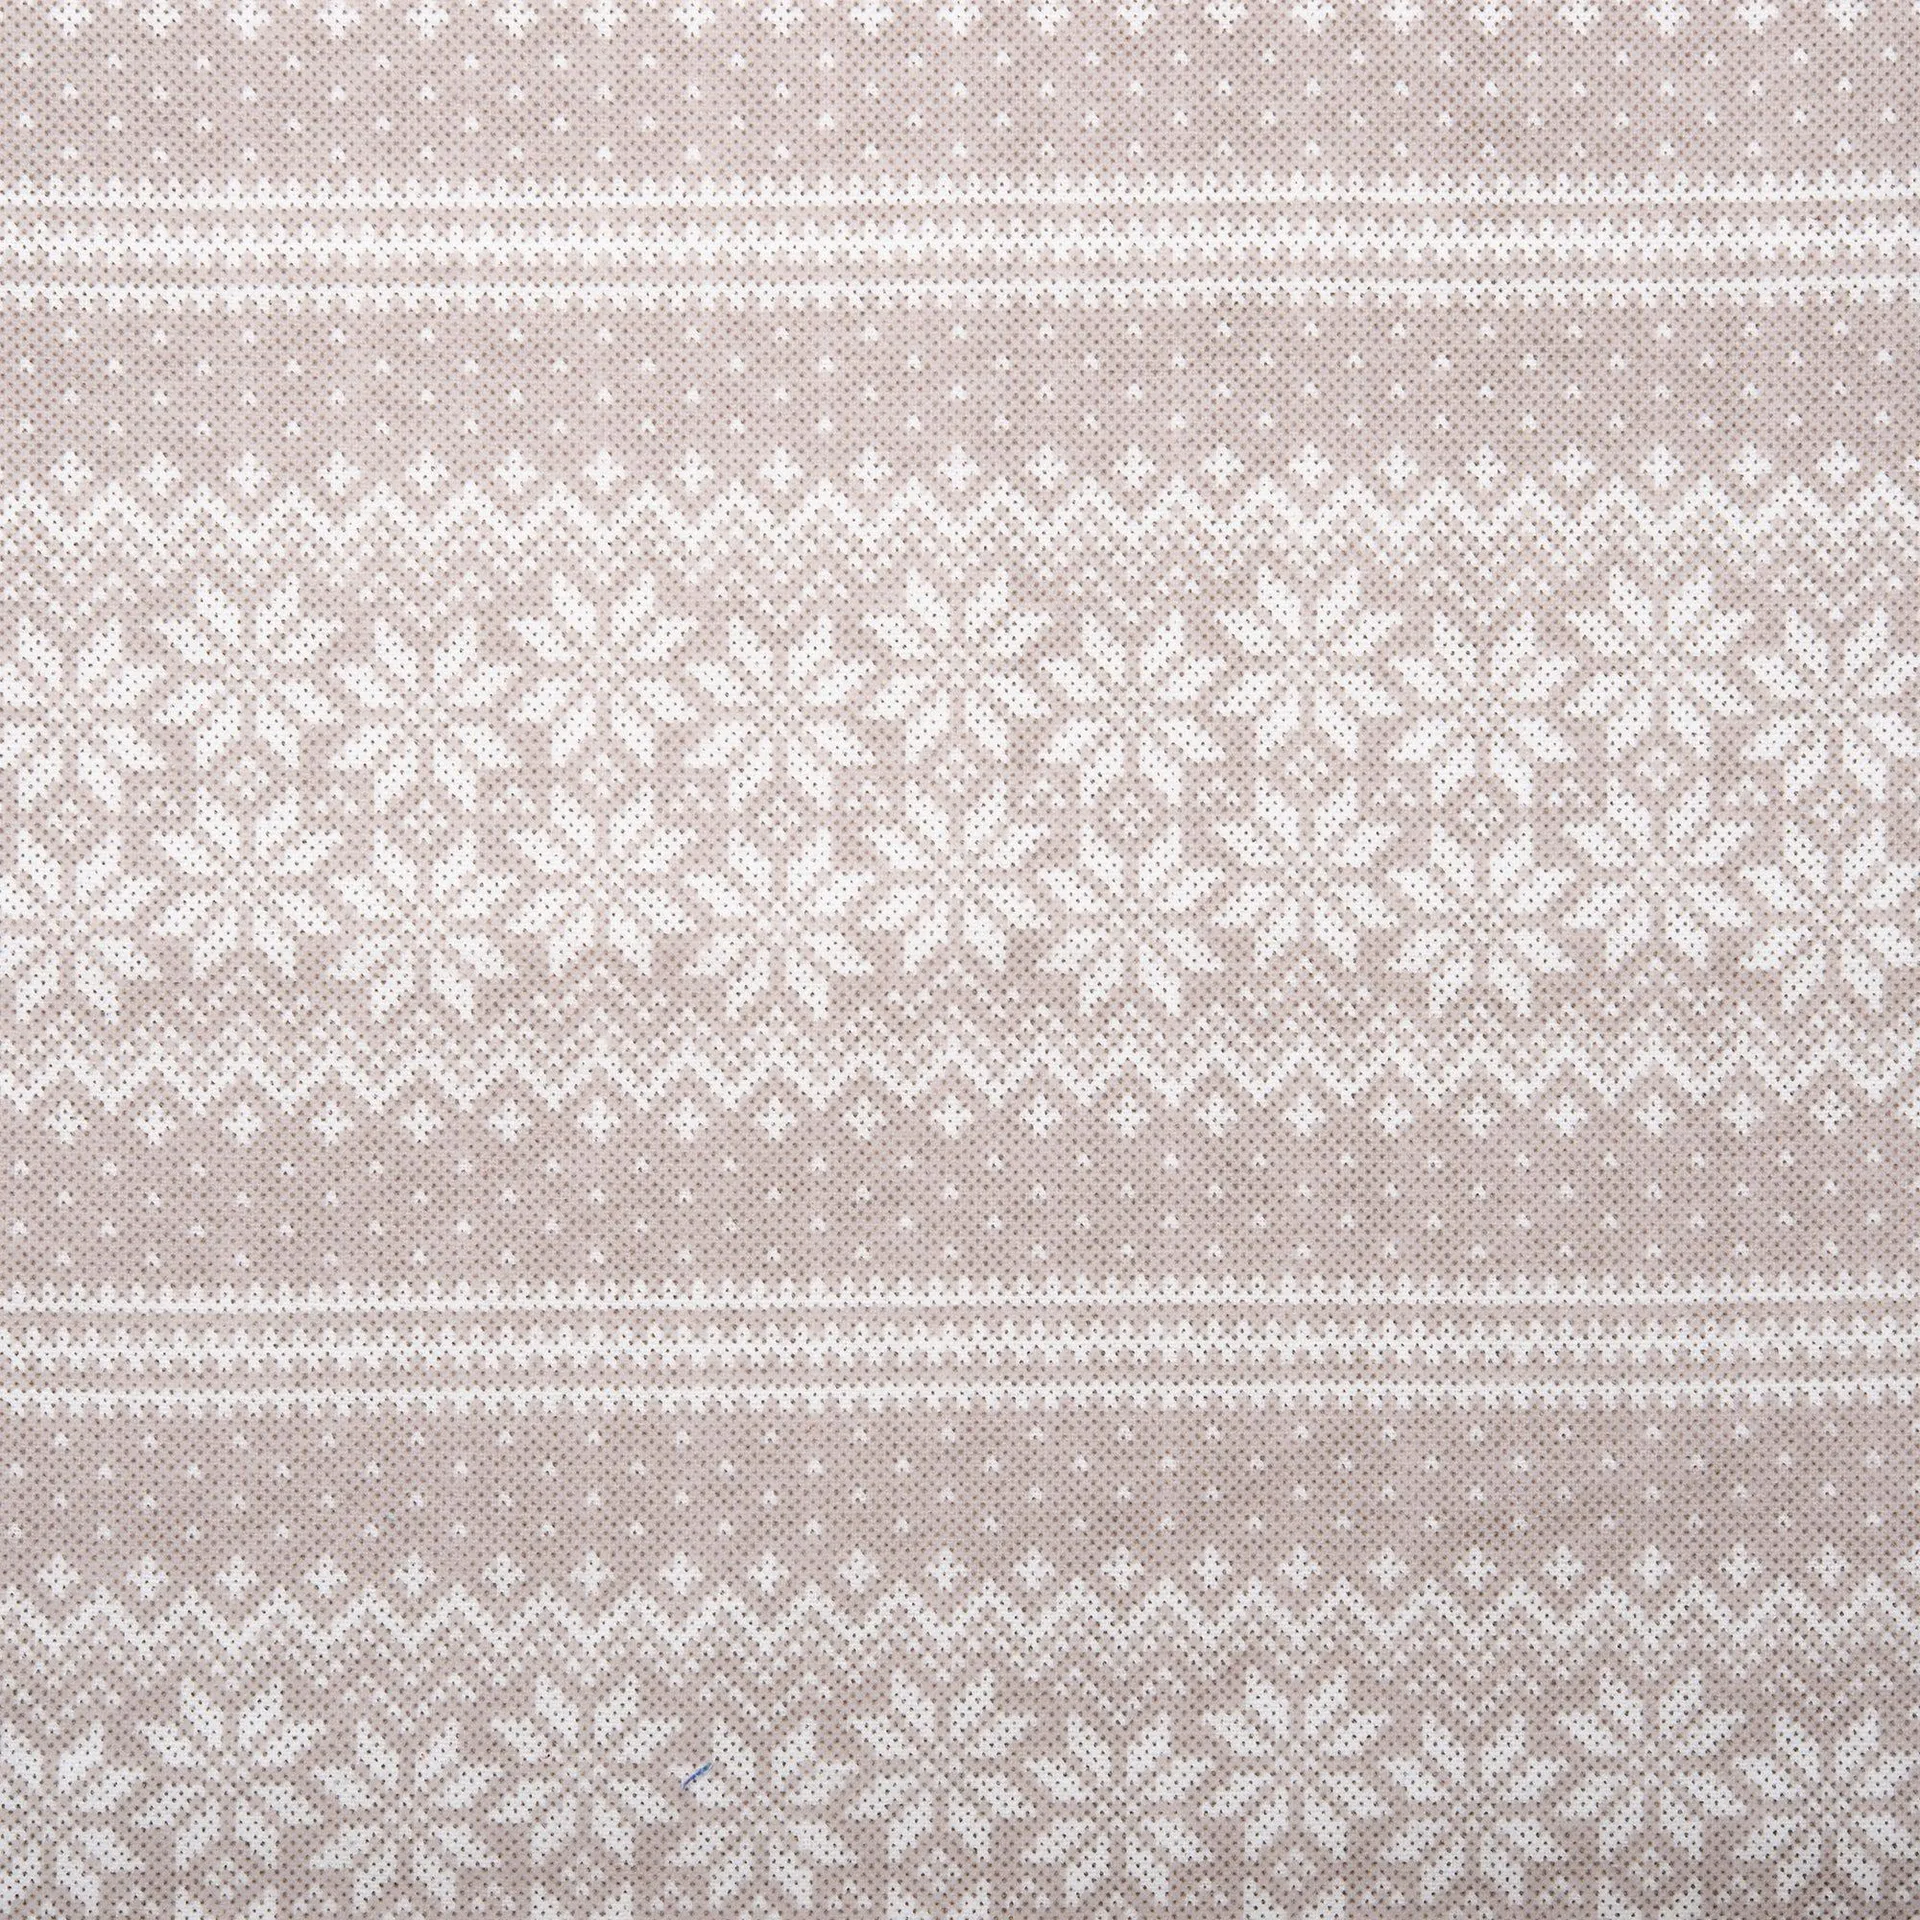 Christmas Flannelette Print - Snowflakes Stripes - Beige